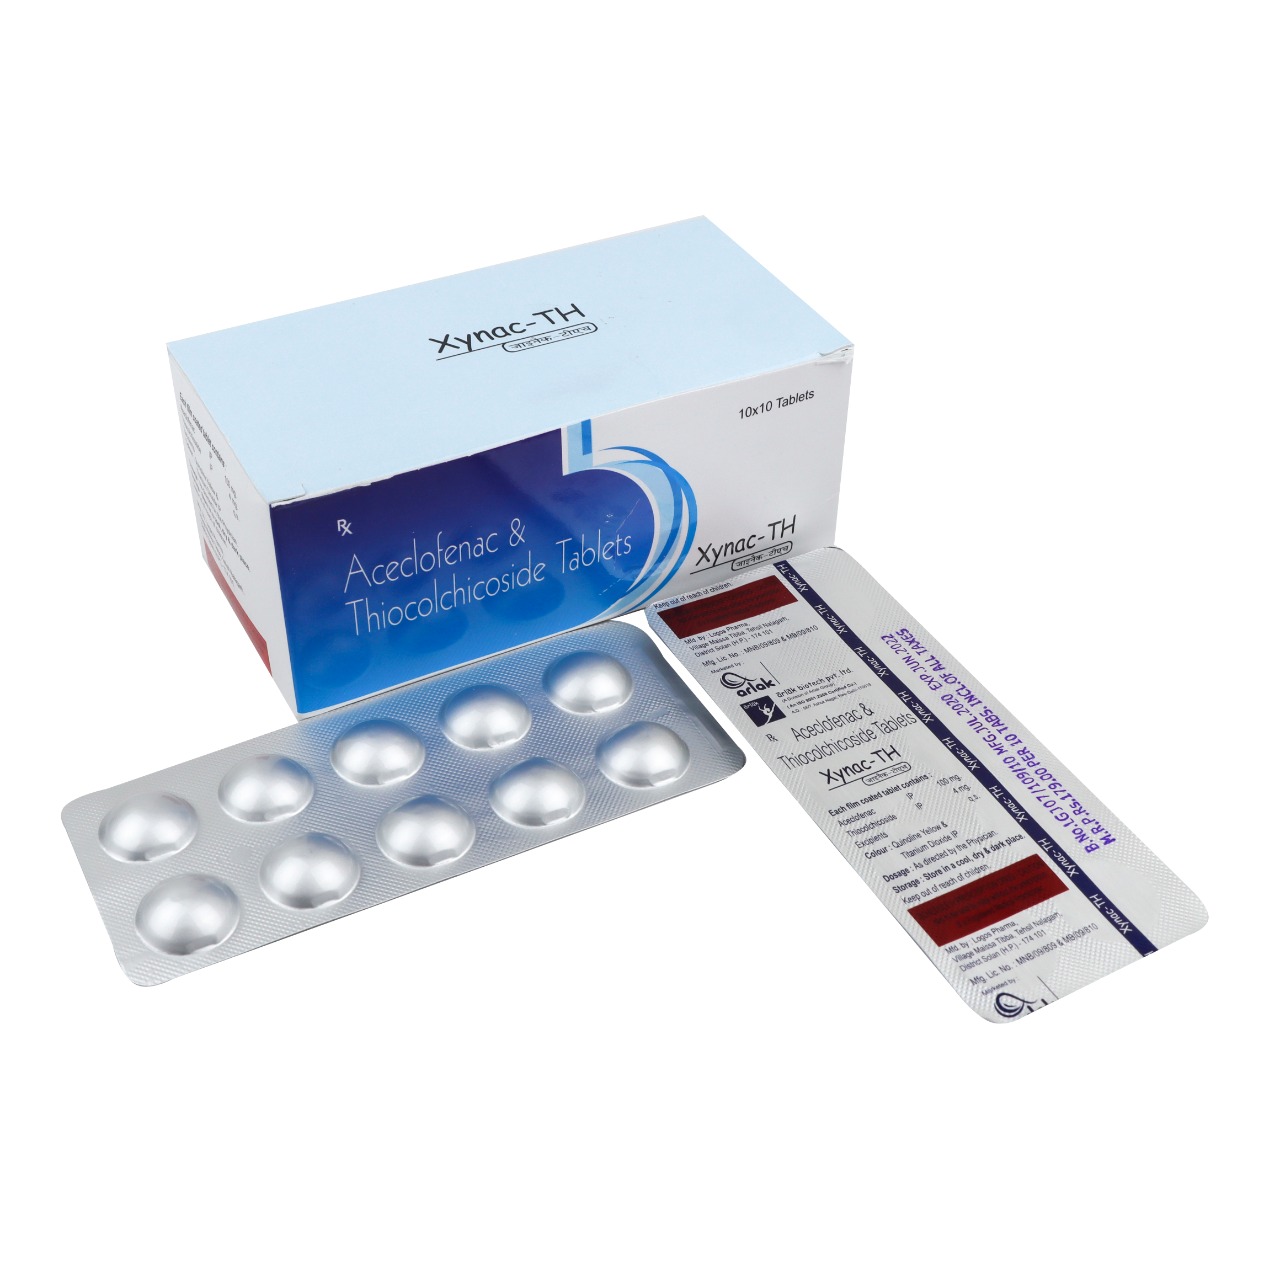 XYNAC-TH-4 Tablets